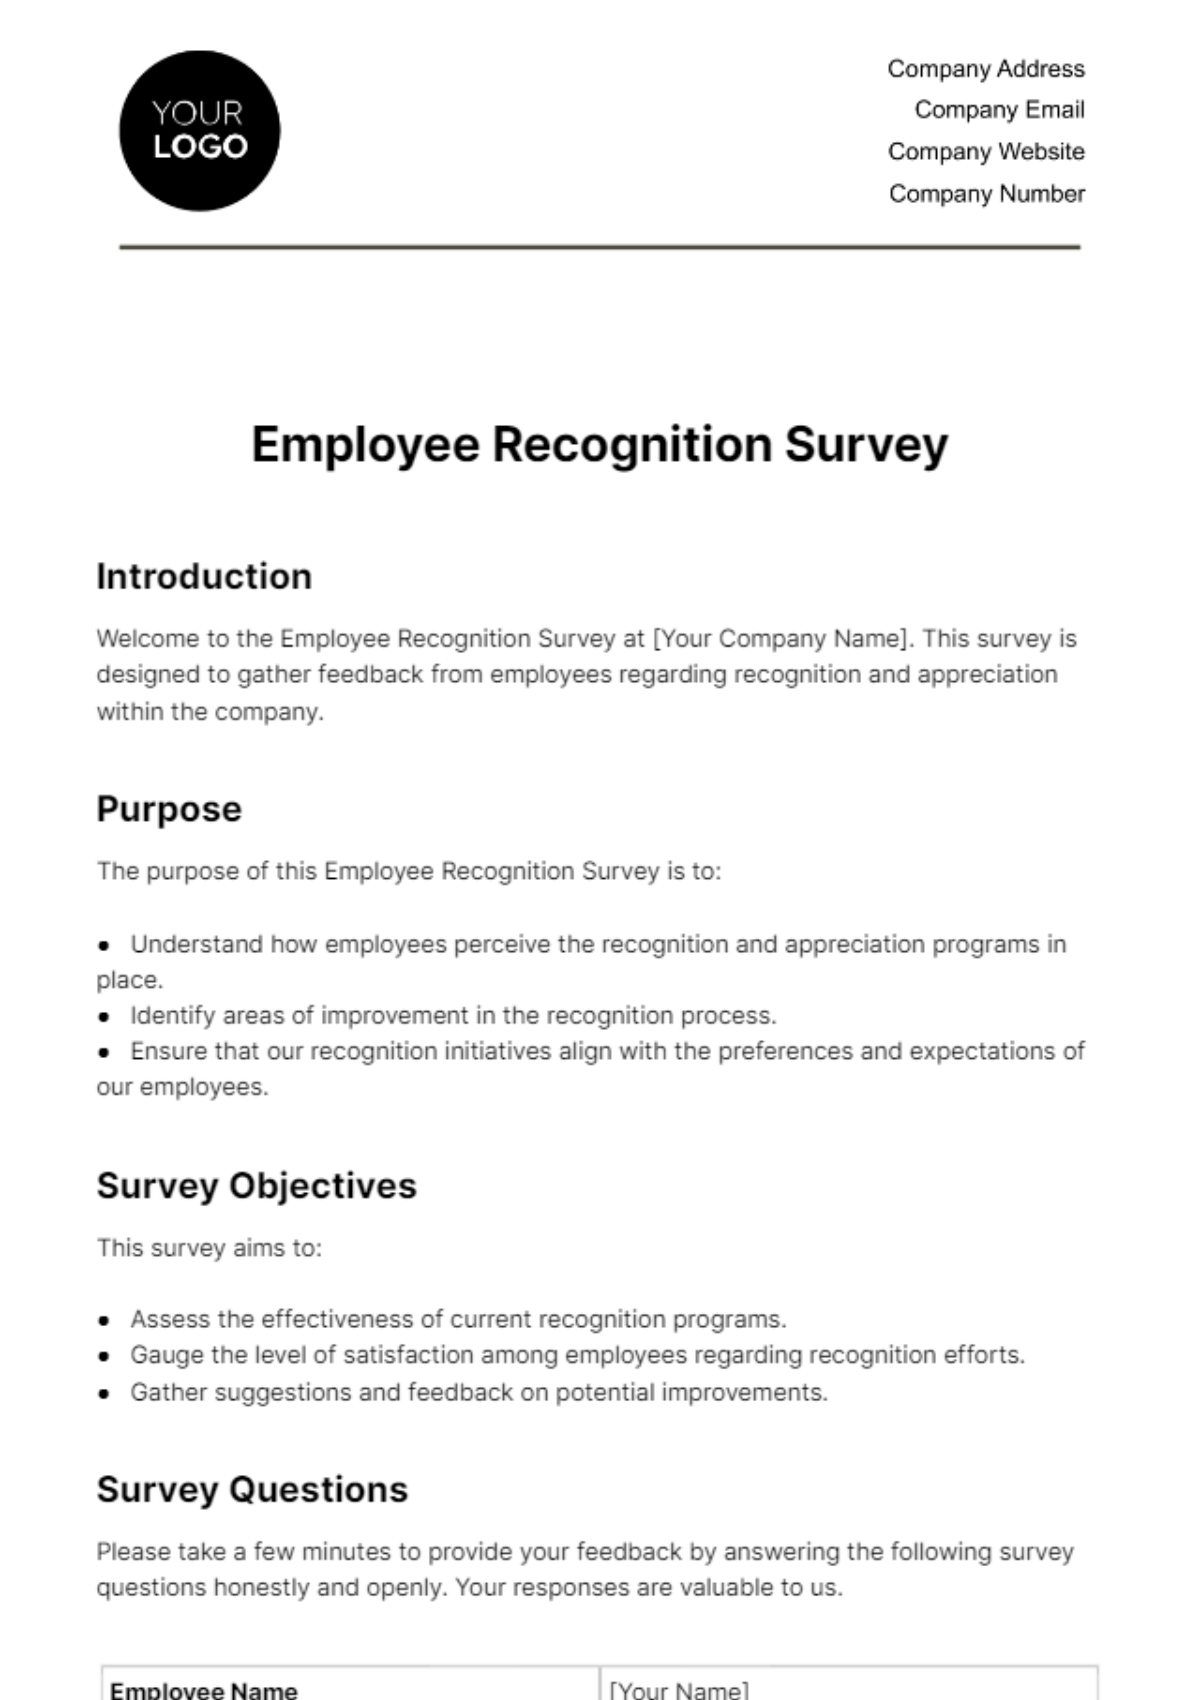 Employee Recognition Survey HR Template